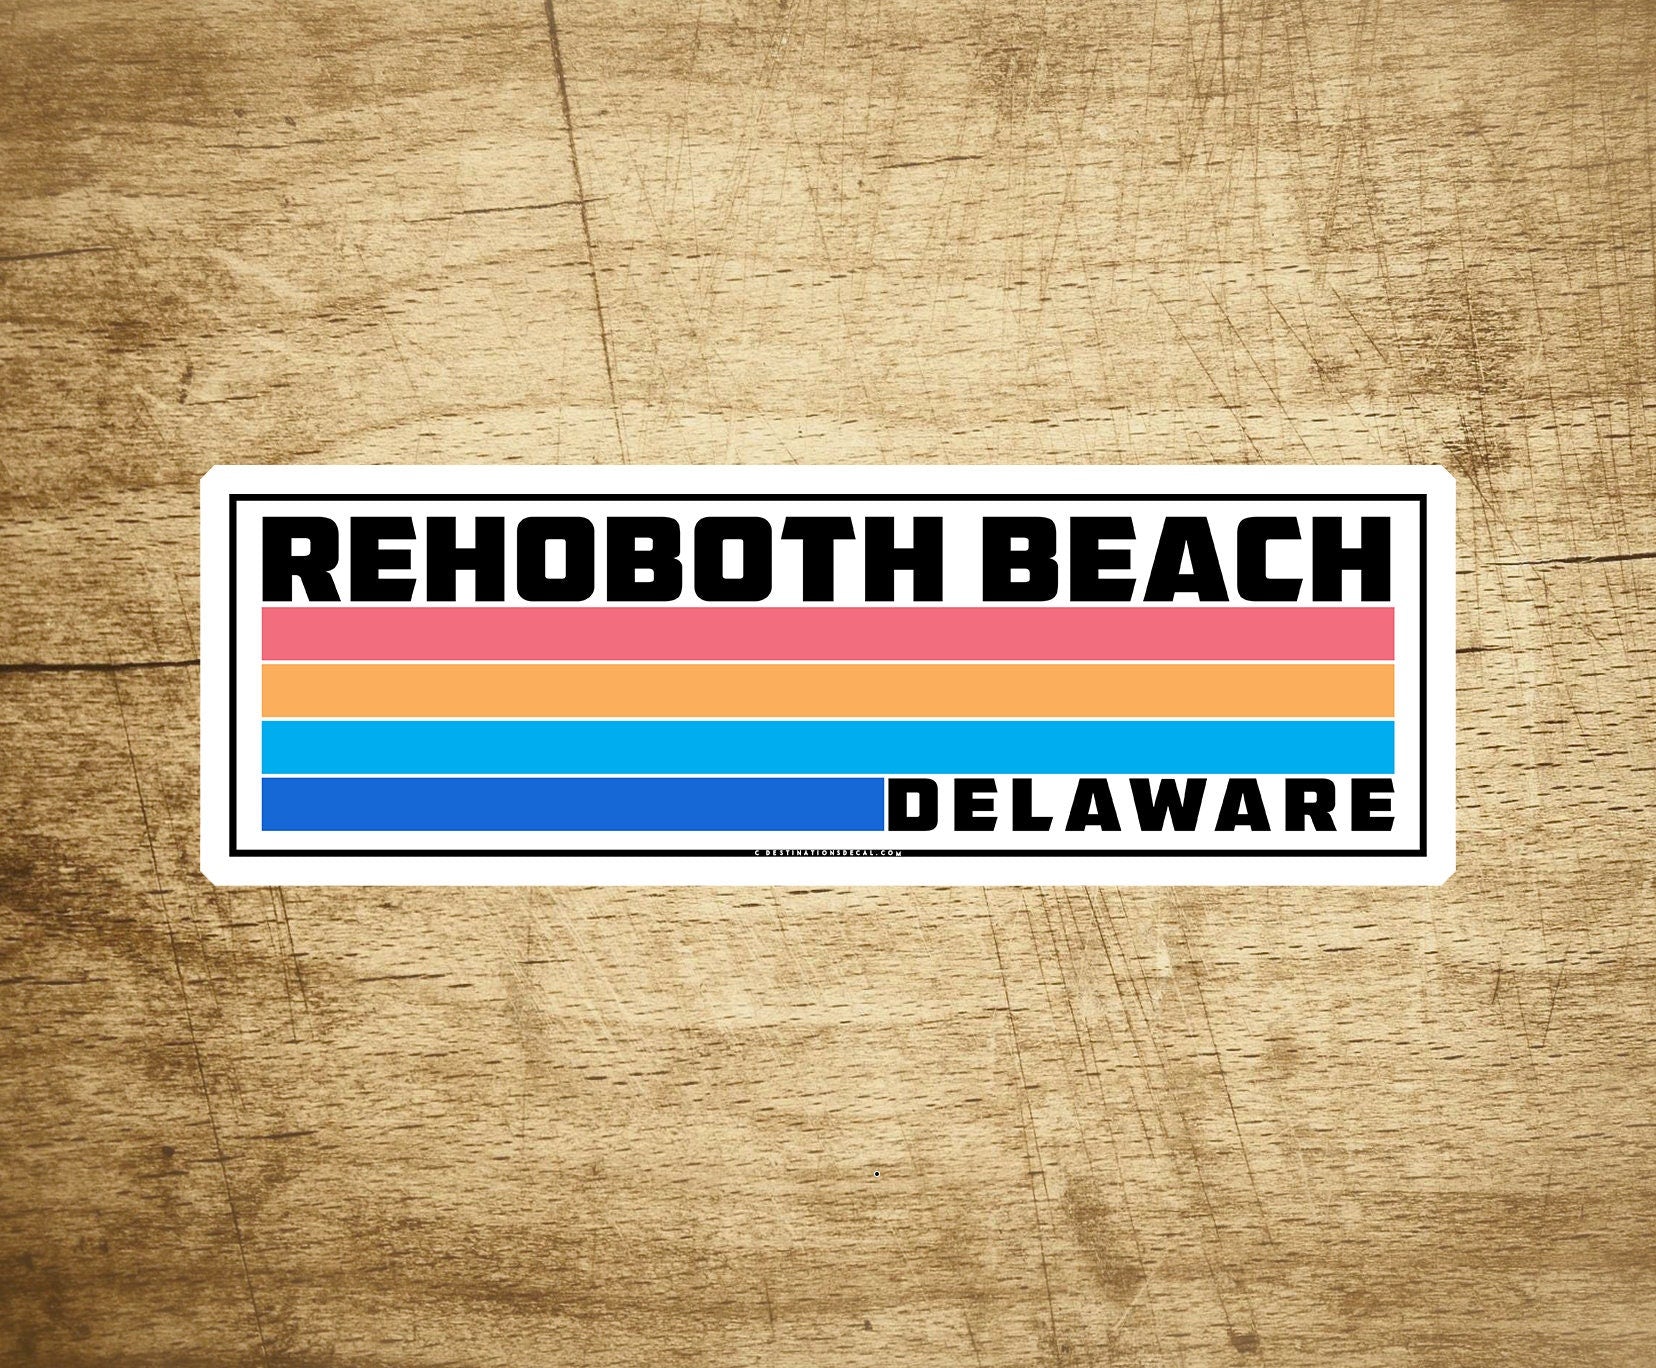 Rehoboth Beach Delaware Sticker Travel Decal 3.75" X 1.3"